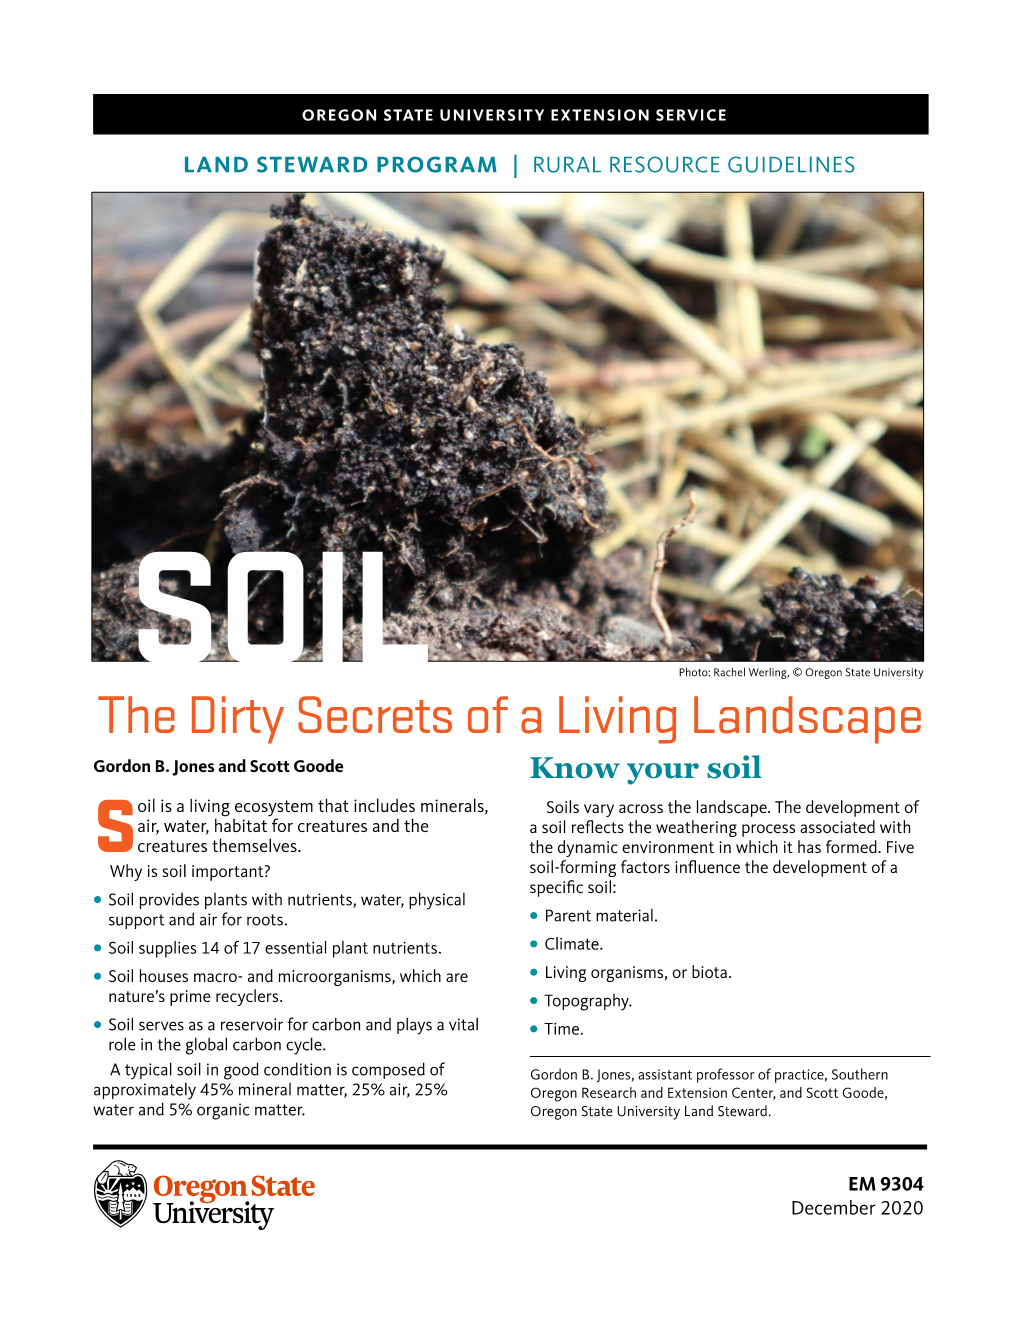 Soil: the Dirty Secrets of a Living Landscape